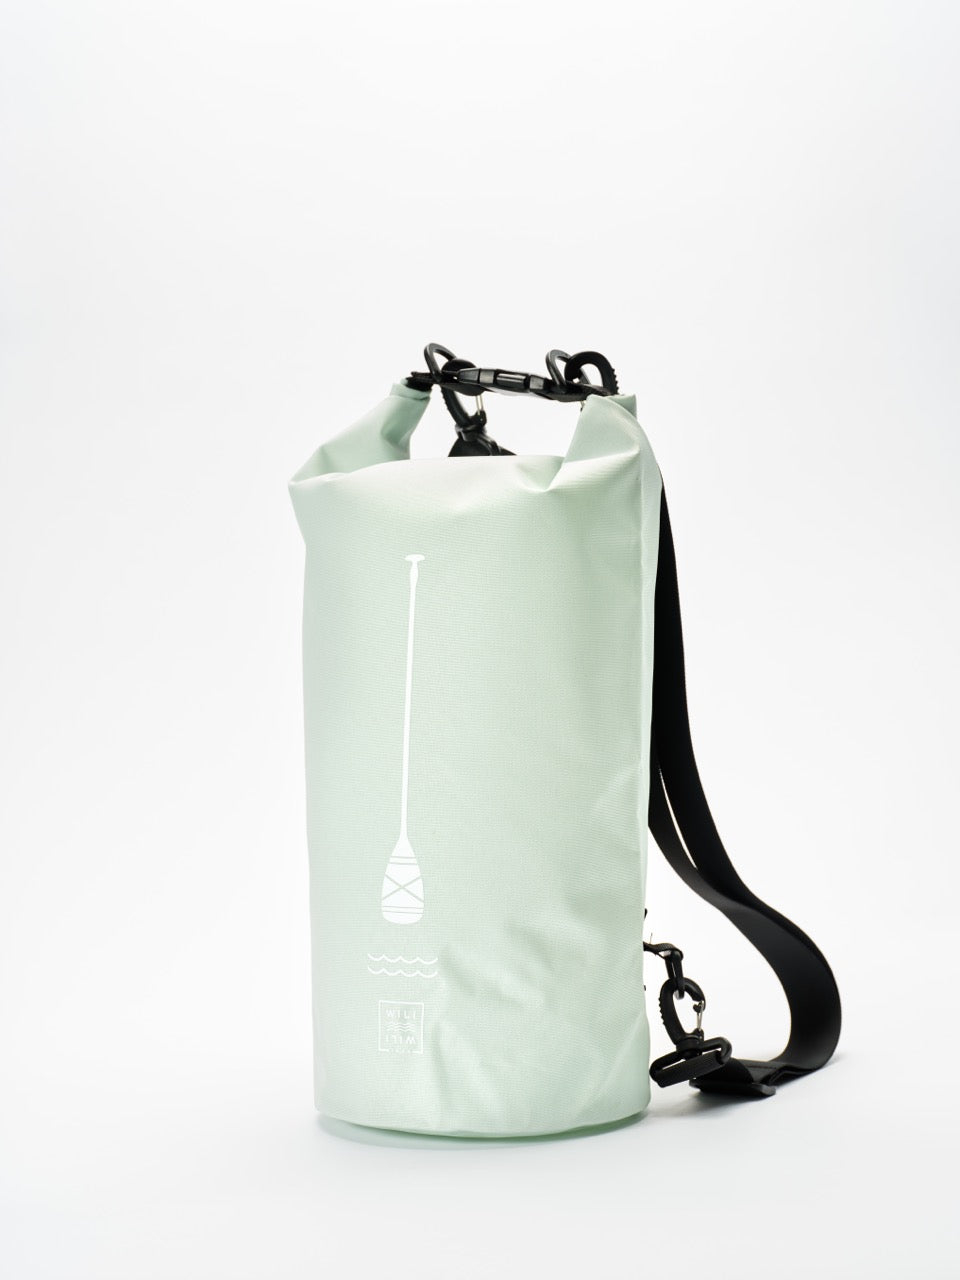 Paddle Paddle - 15 Liter Dry Bag - Wave Green